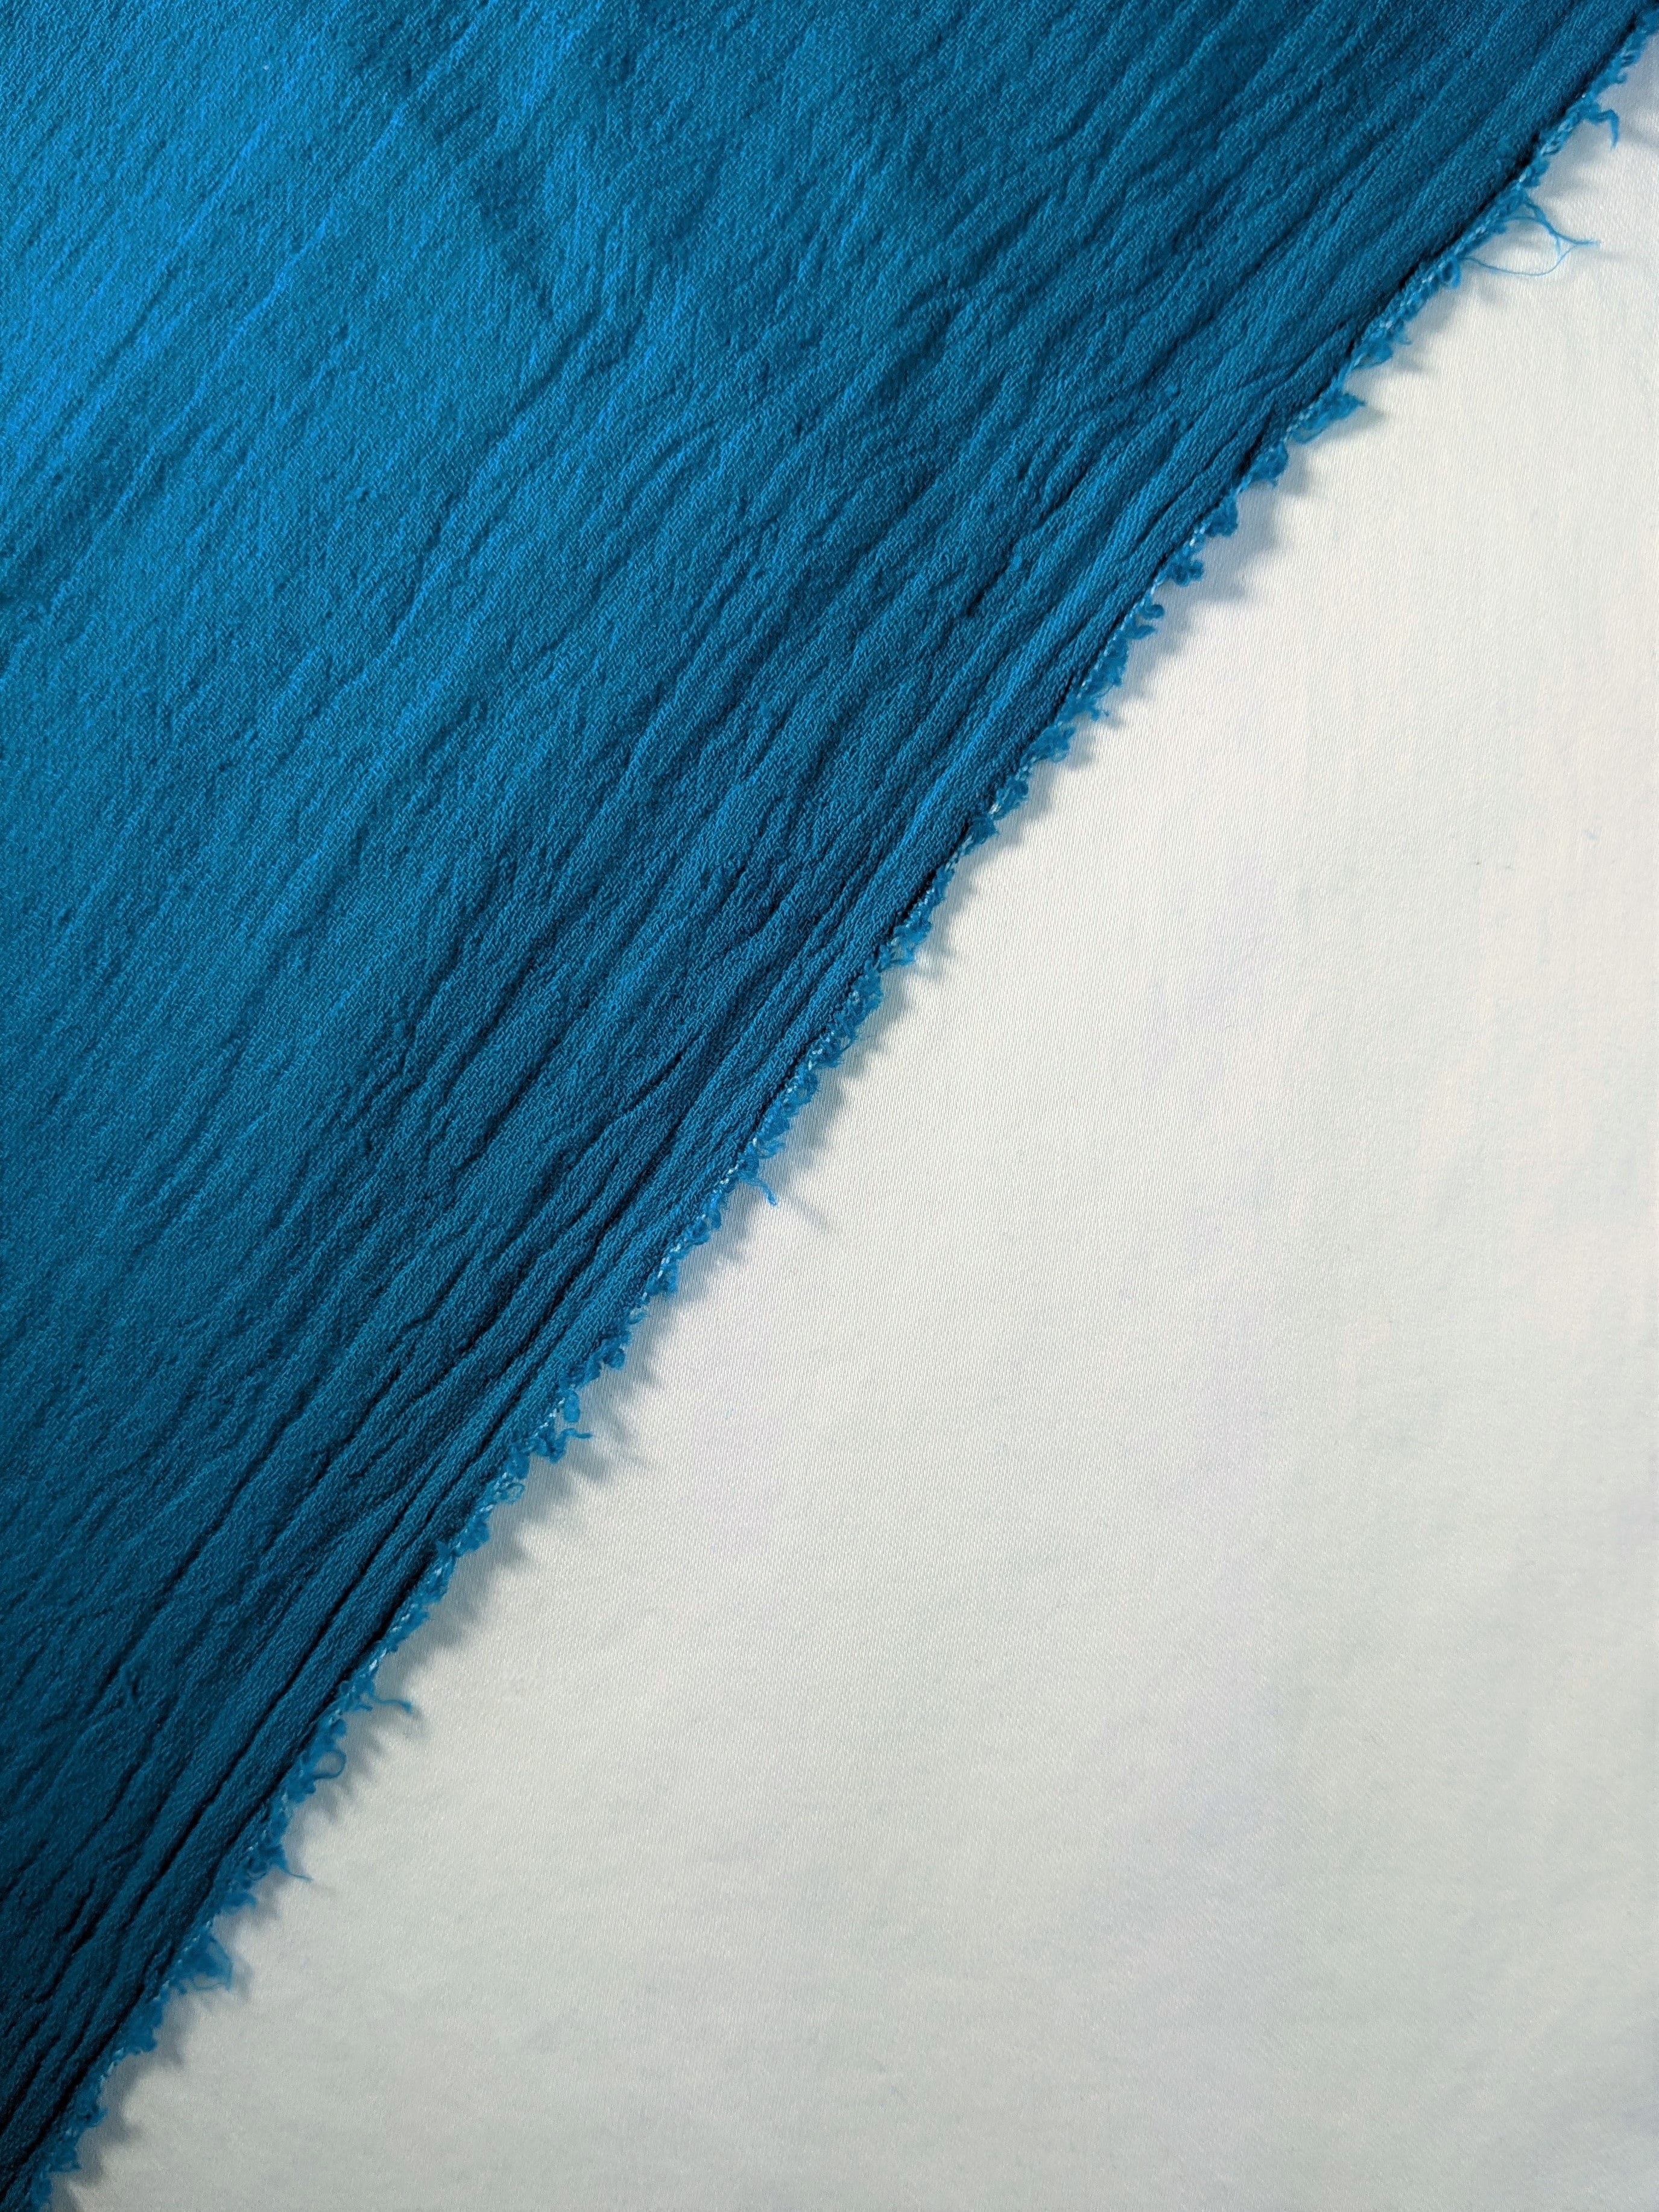 textures, texture, cloth, blue, surface